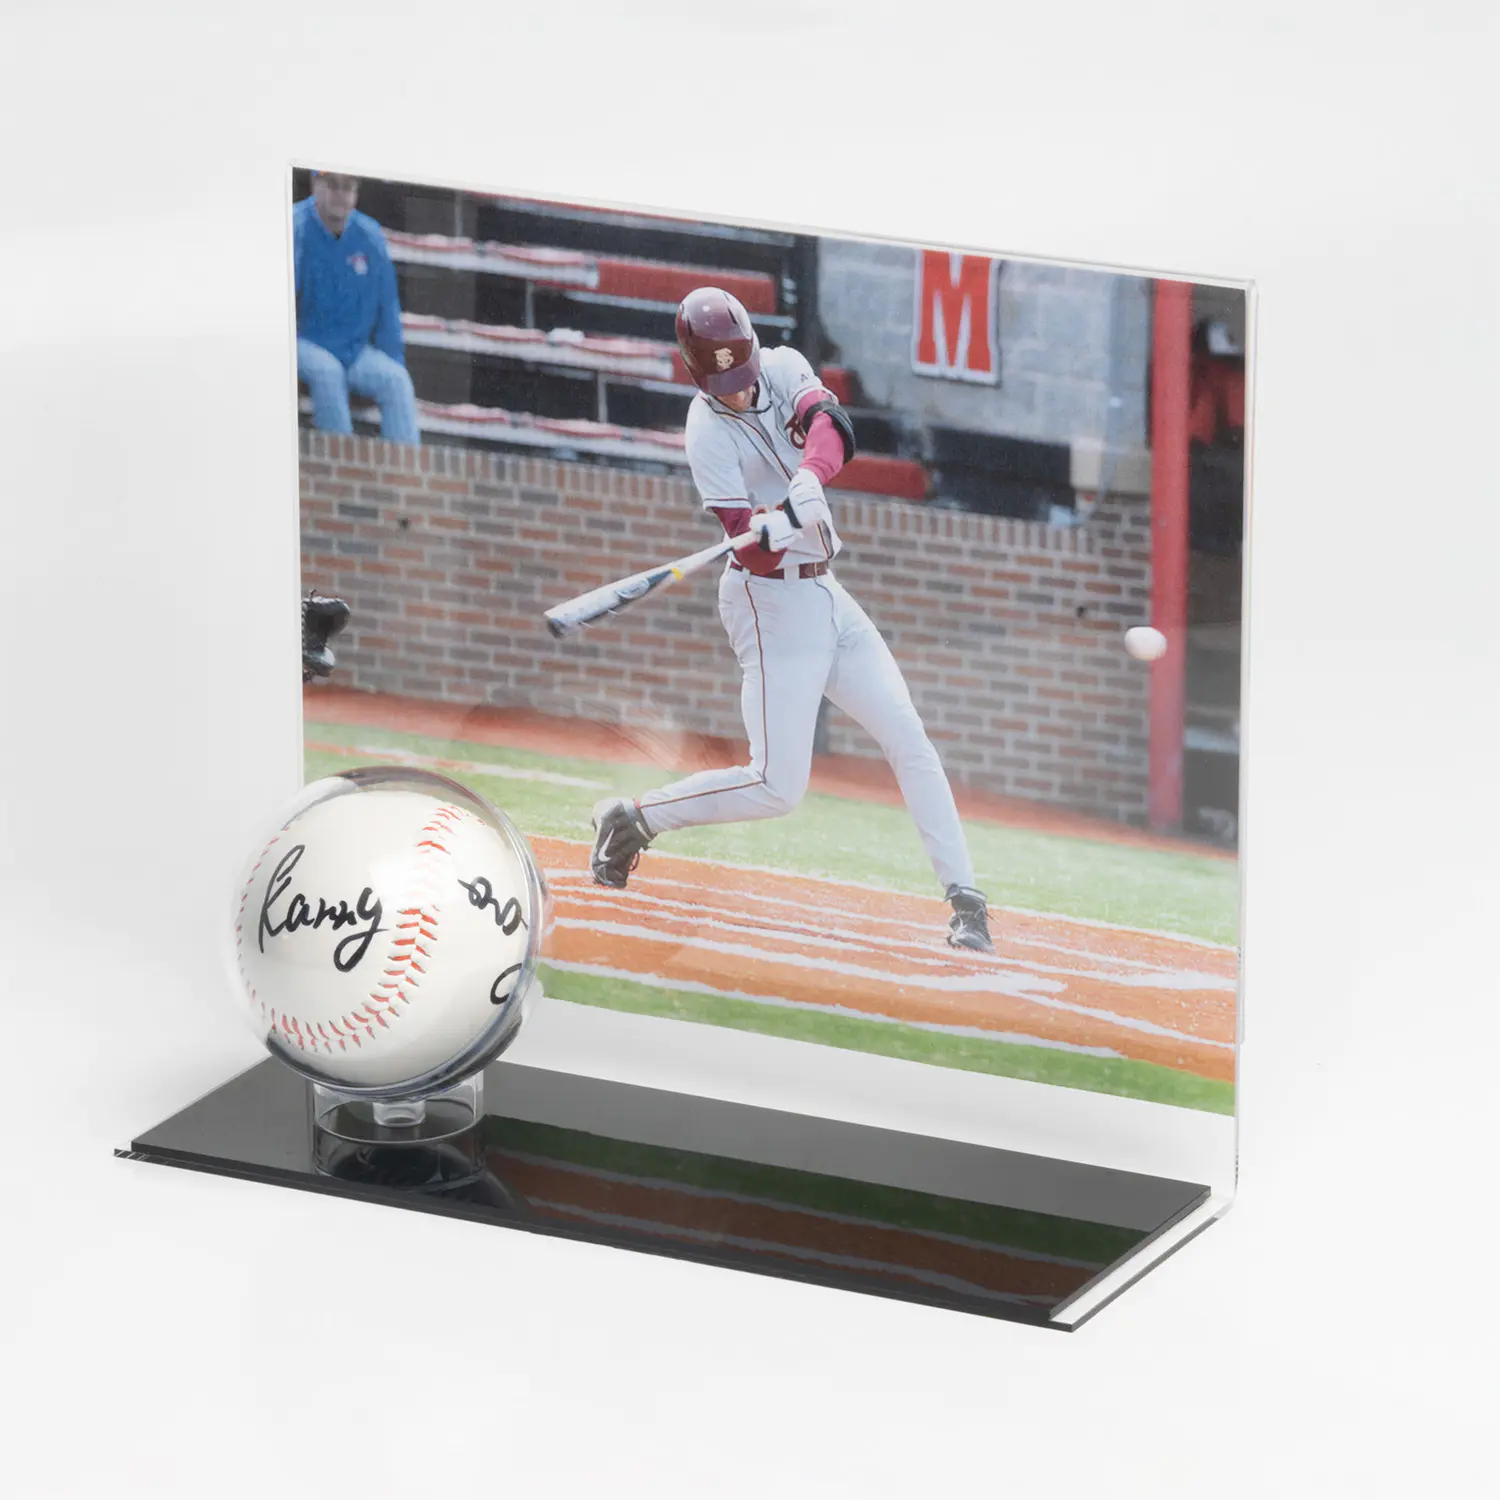 Fournitures de collection Acrylique Single Baseball Display Case avec support photo horizontal